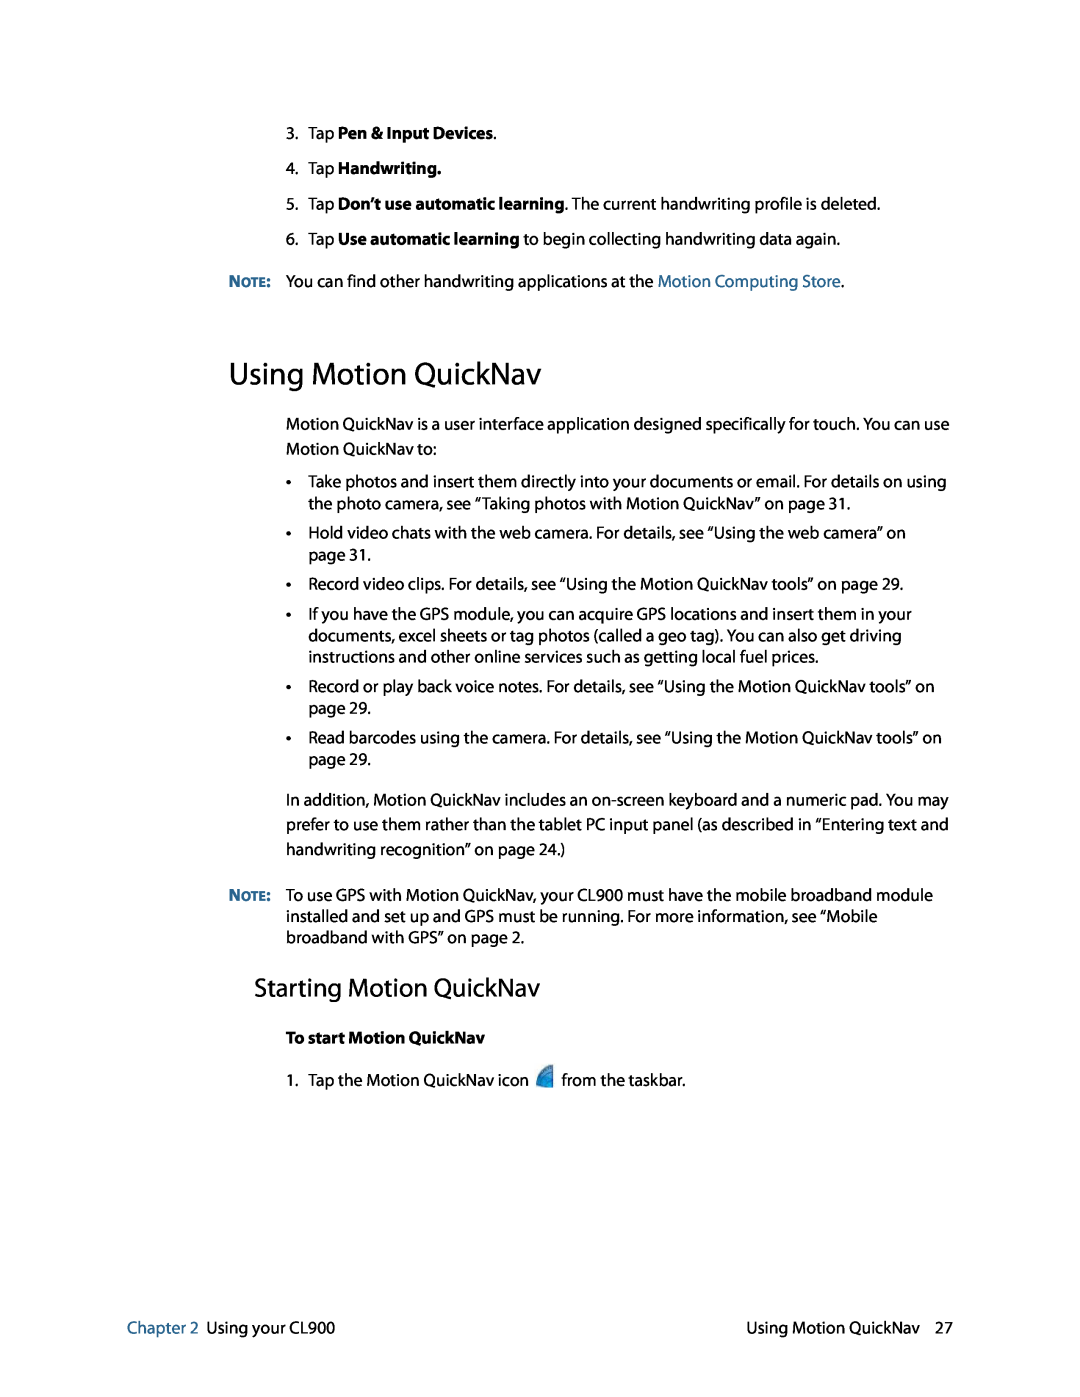 Motion FWS-001 manual Using Motion QuickNav, Starting Motion QuickNav, Tap Pen & Input Devices 4. Tap Handwriting 